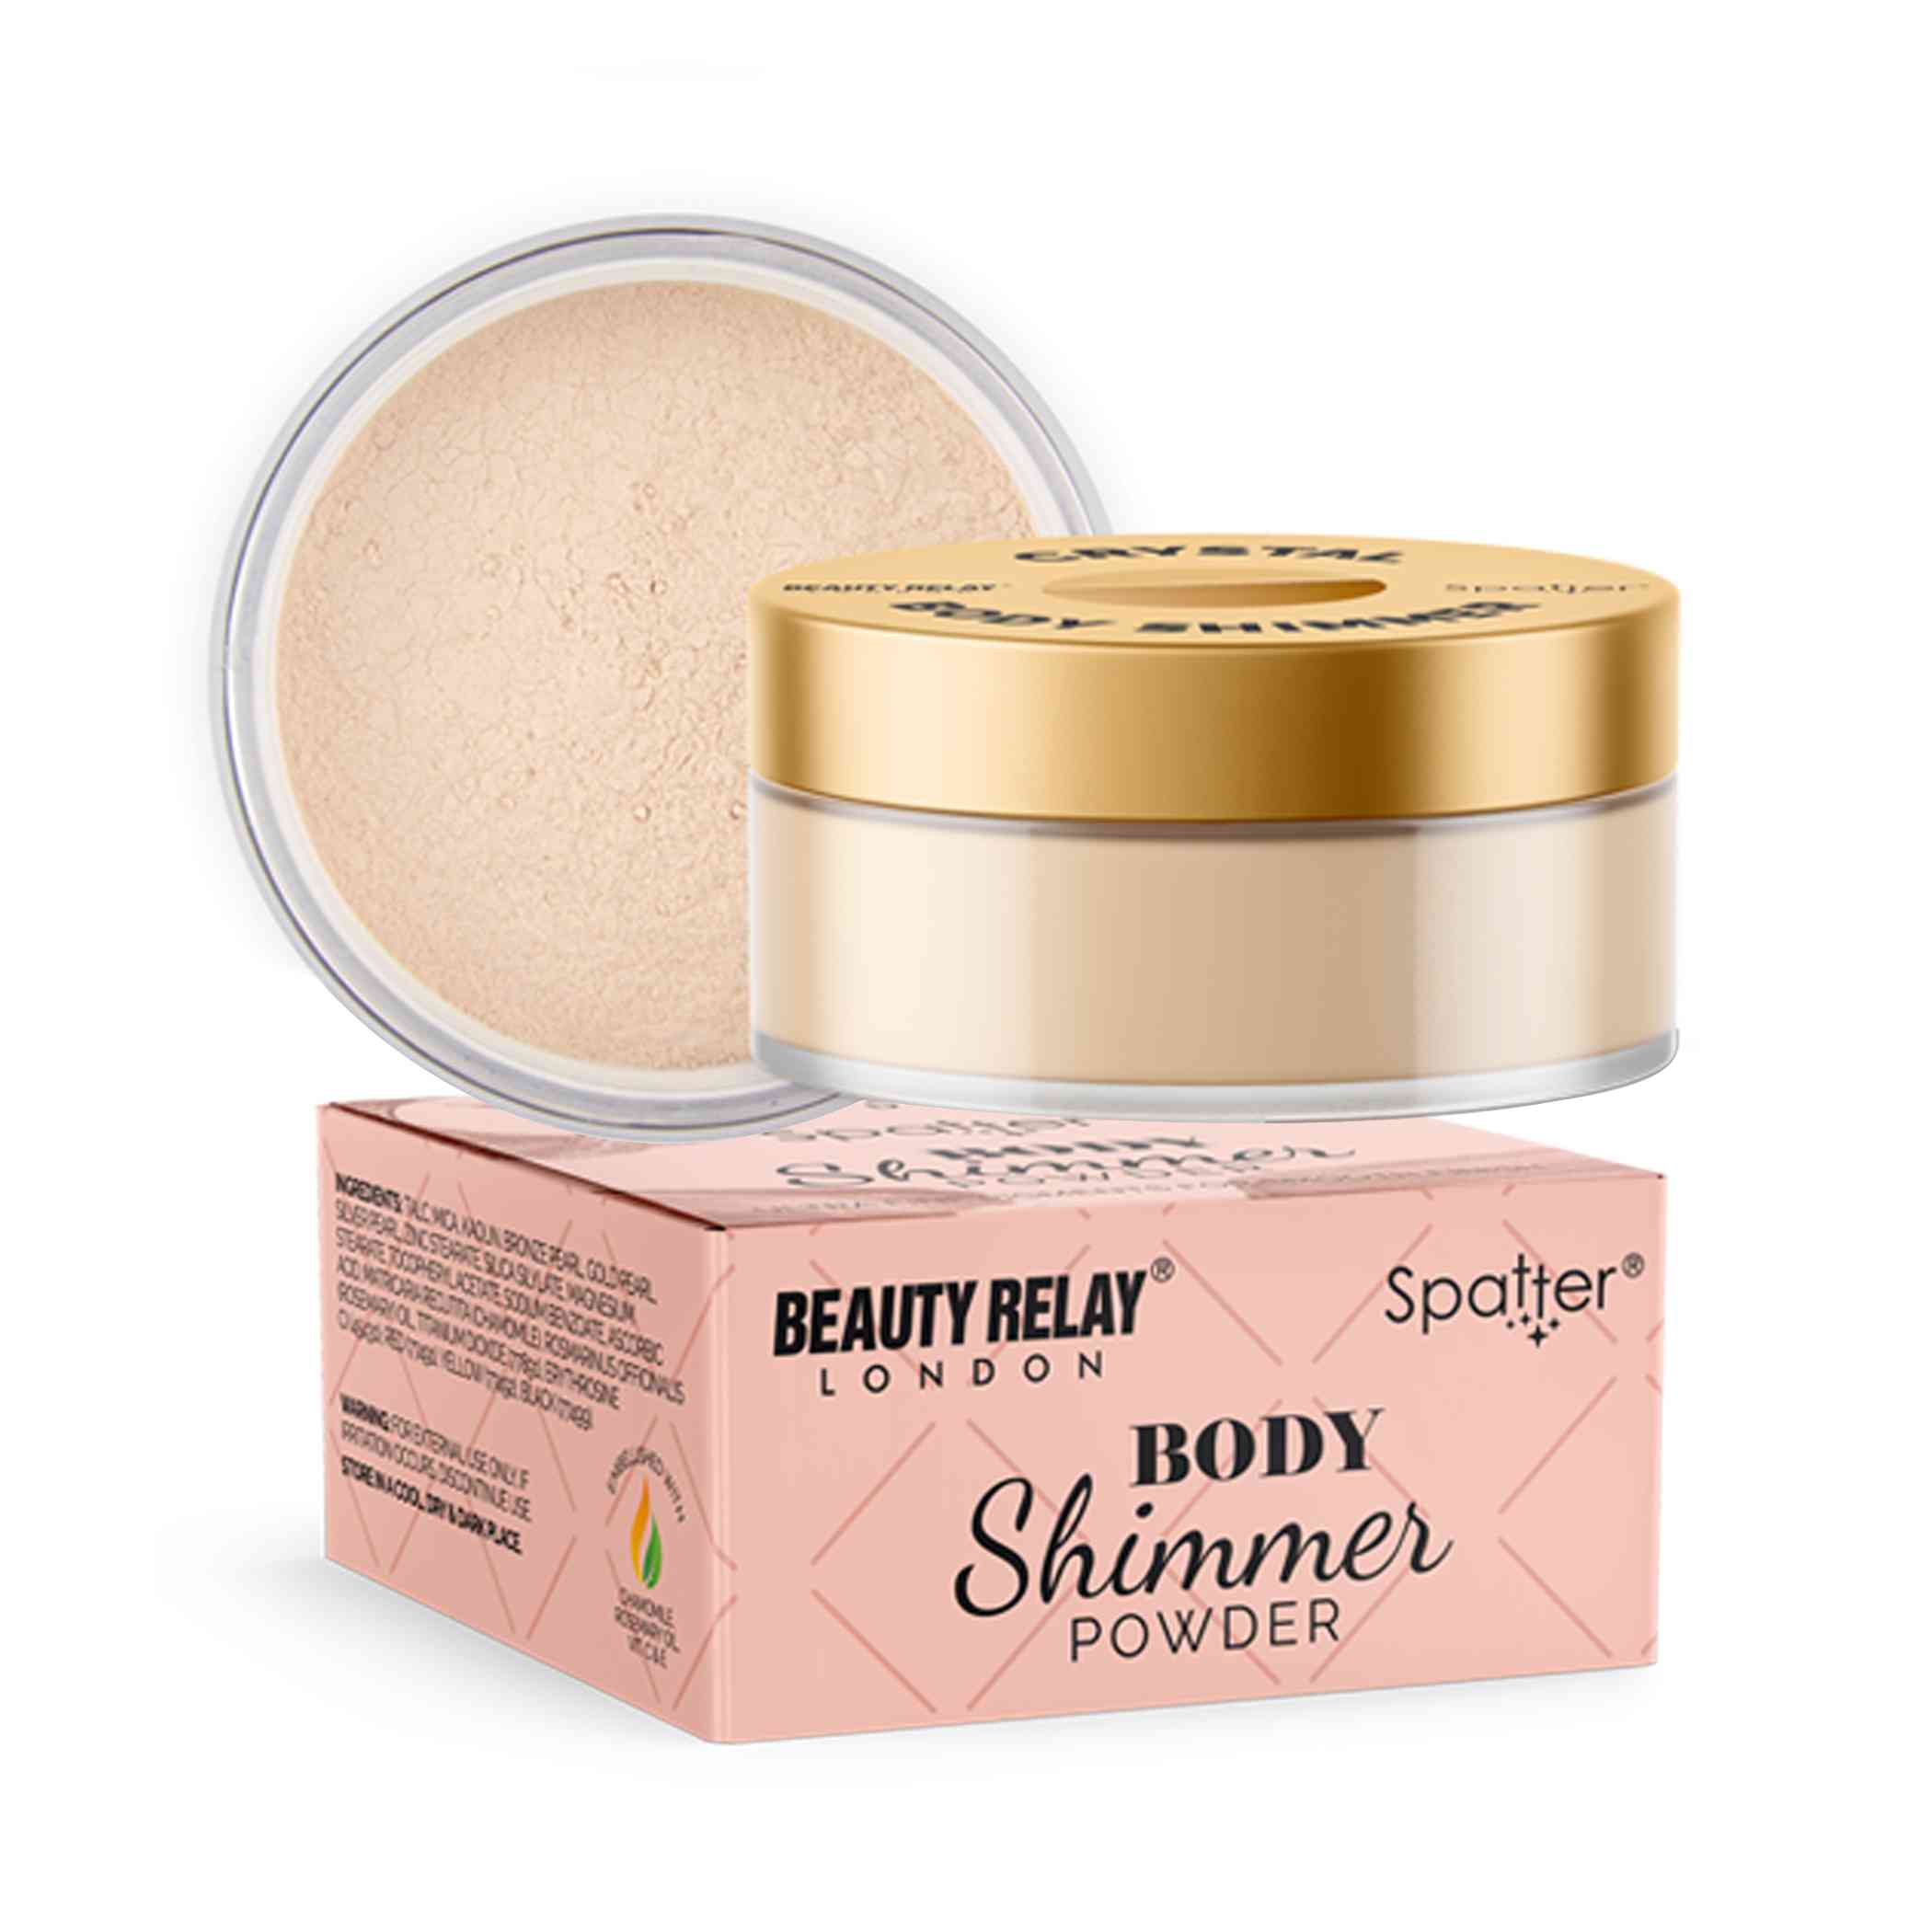 Buy Spatter Crystal Body Shimmer Powder